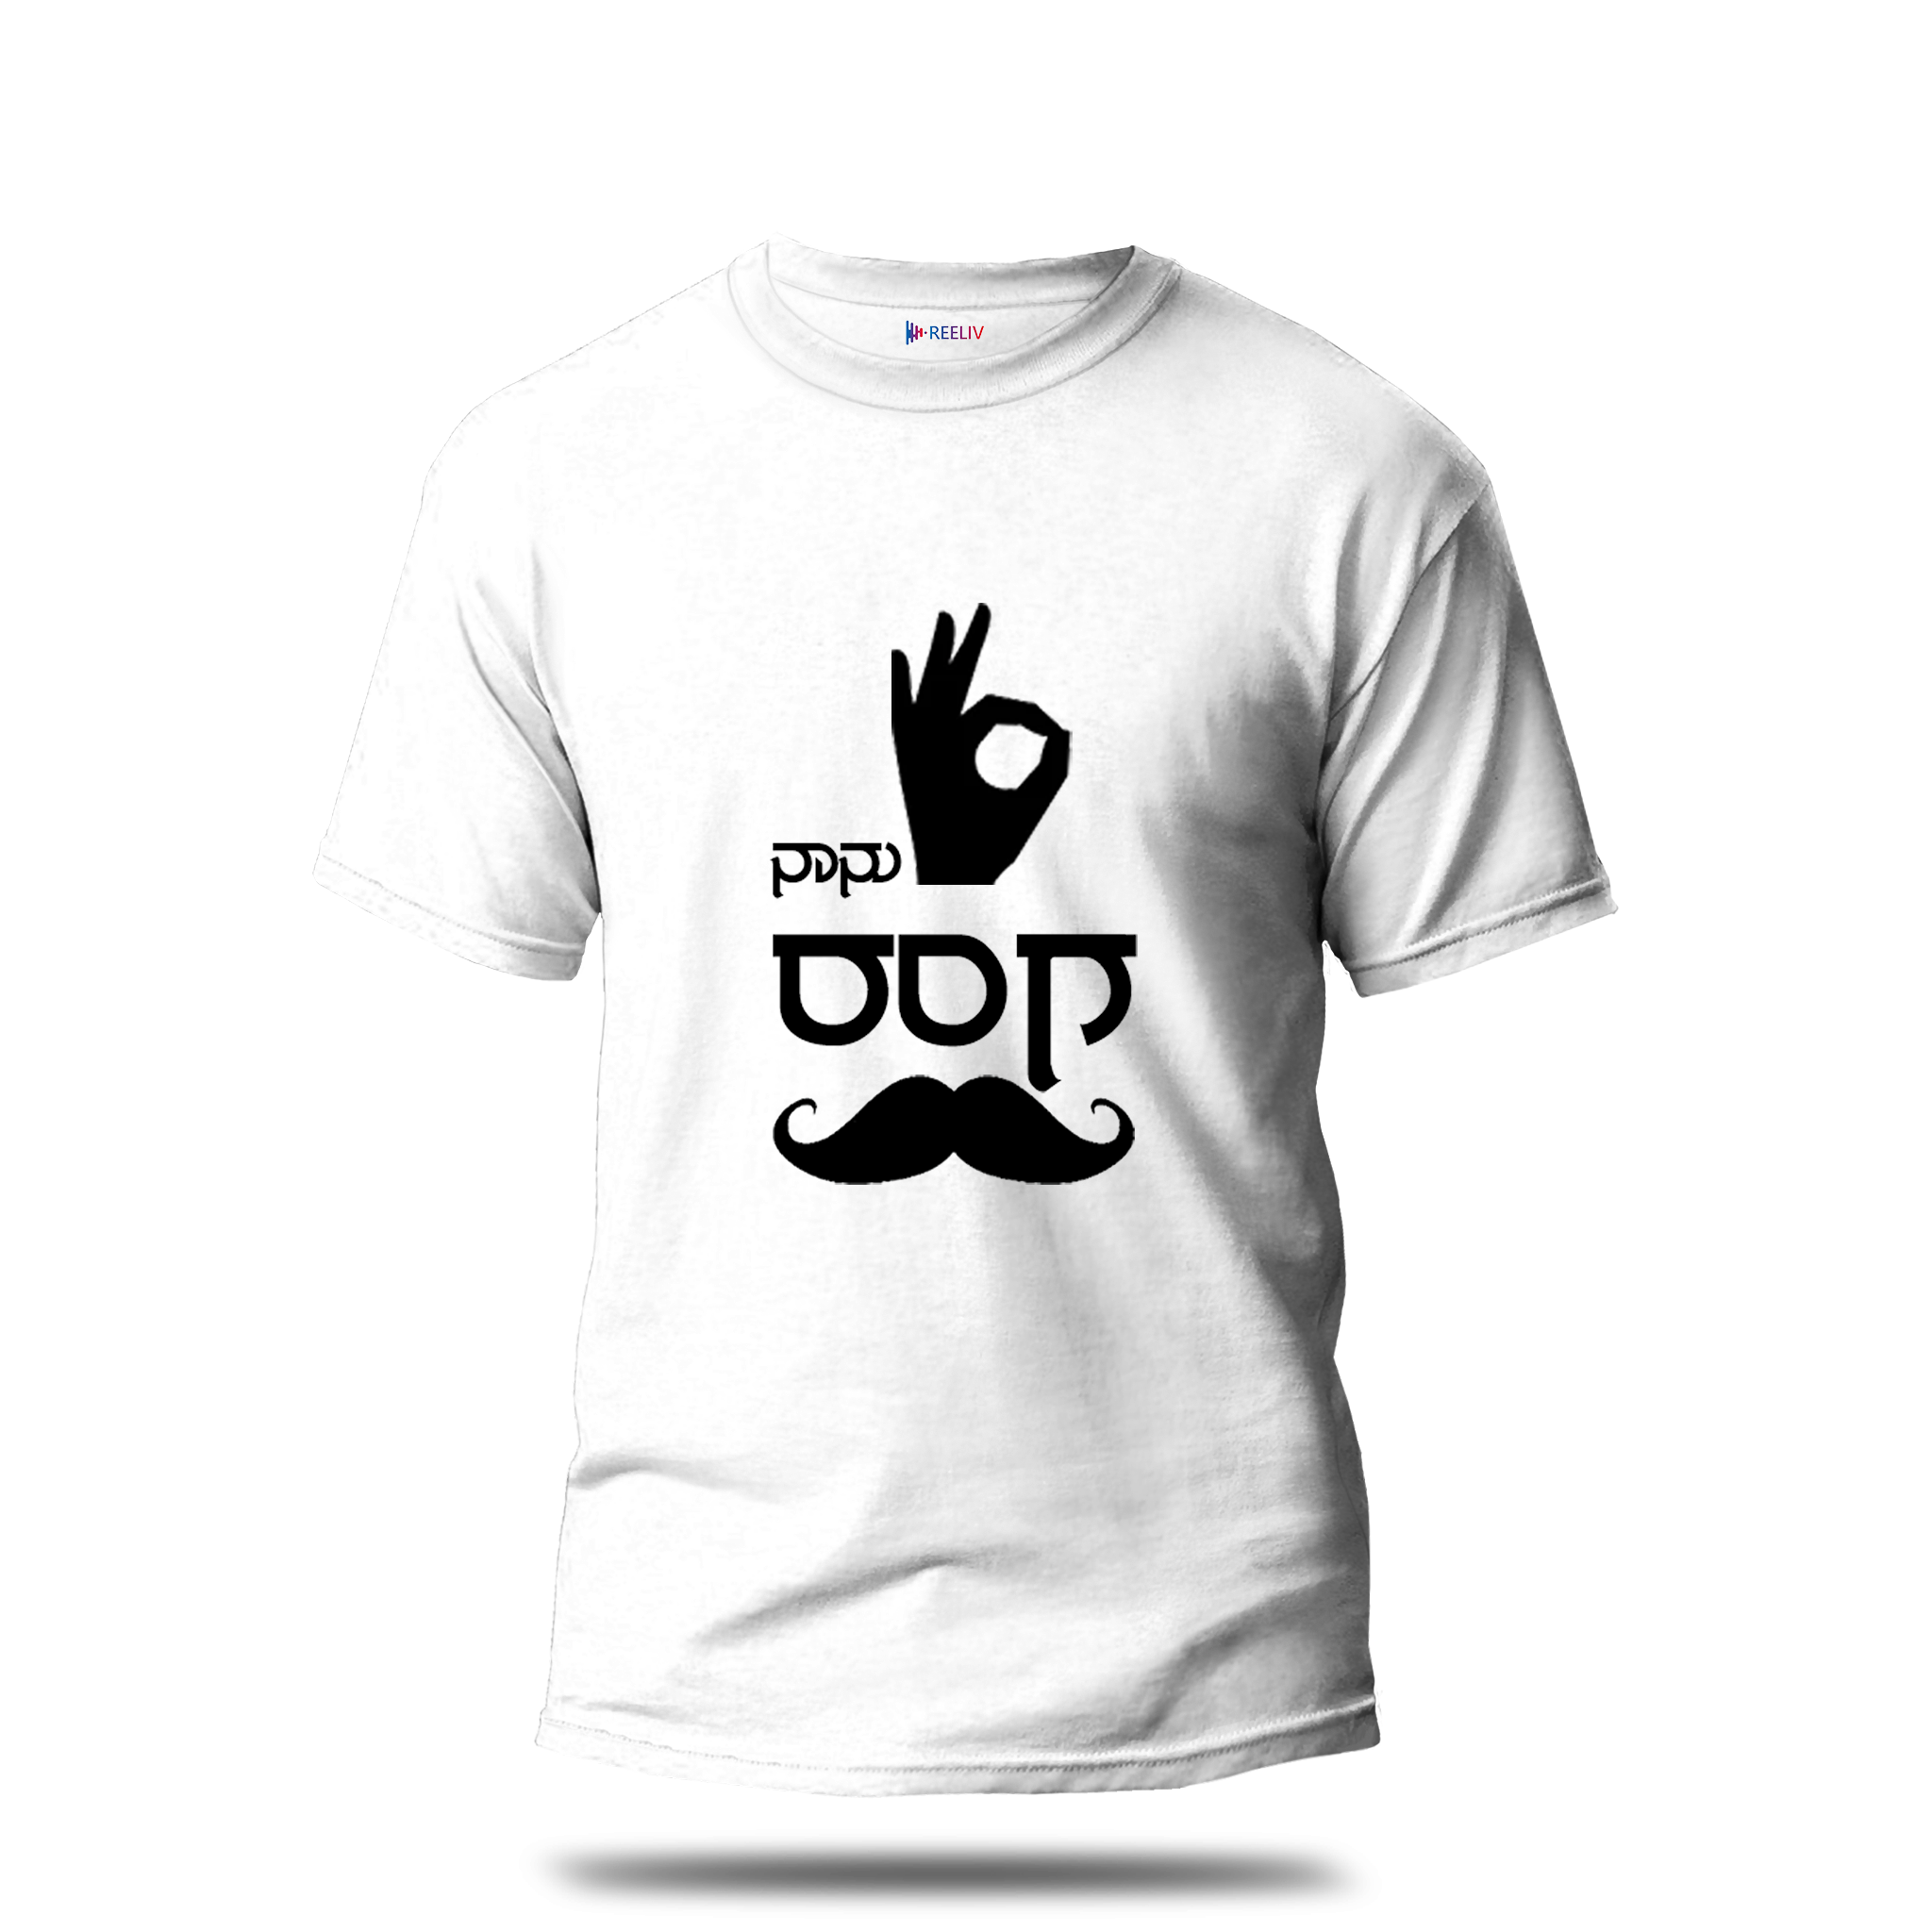 Bio wash T-shirt- Super Ranga